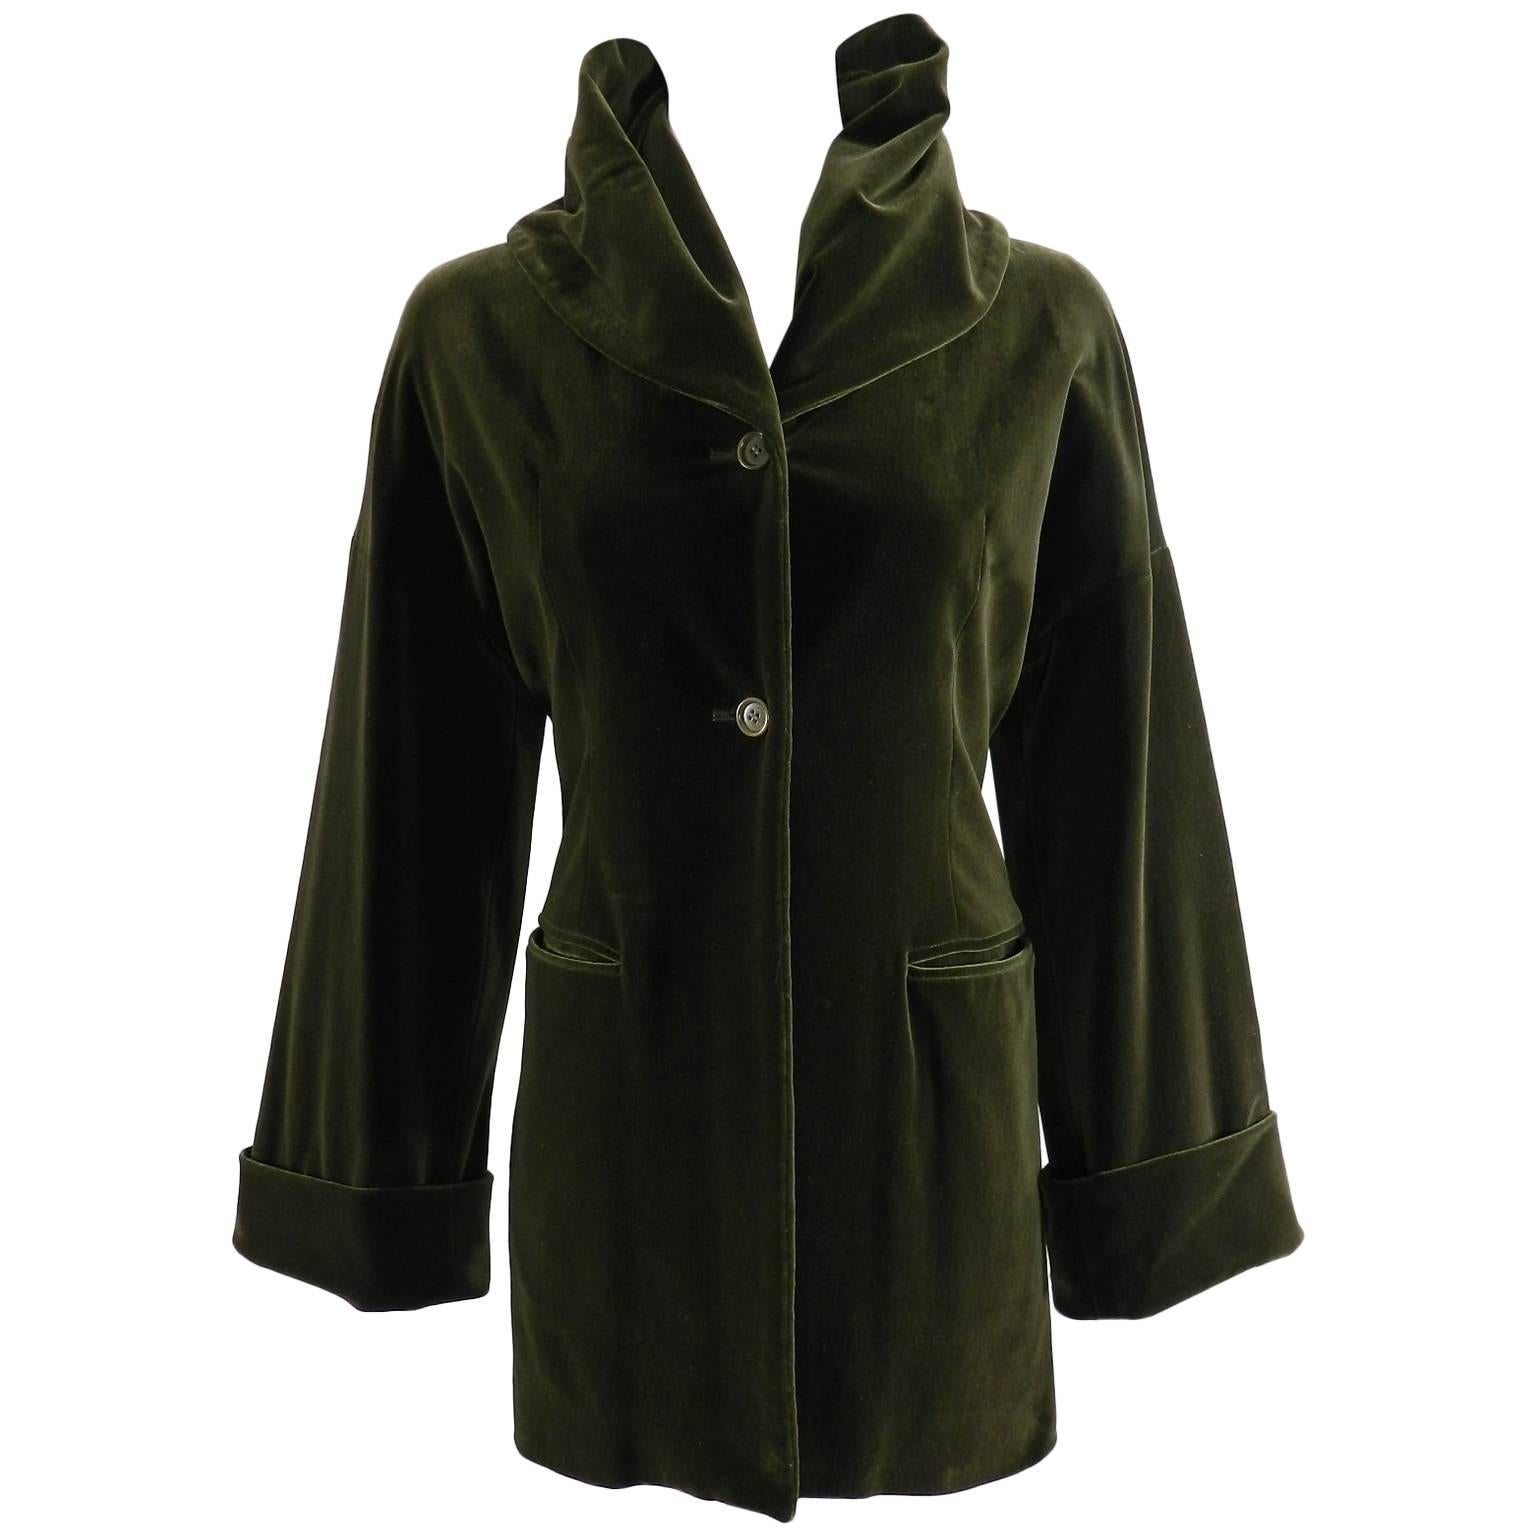 Romeo Gigli Vintage 1989 Olive Green Velvet Jacket Coat